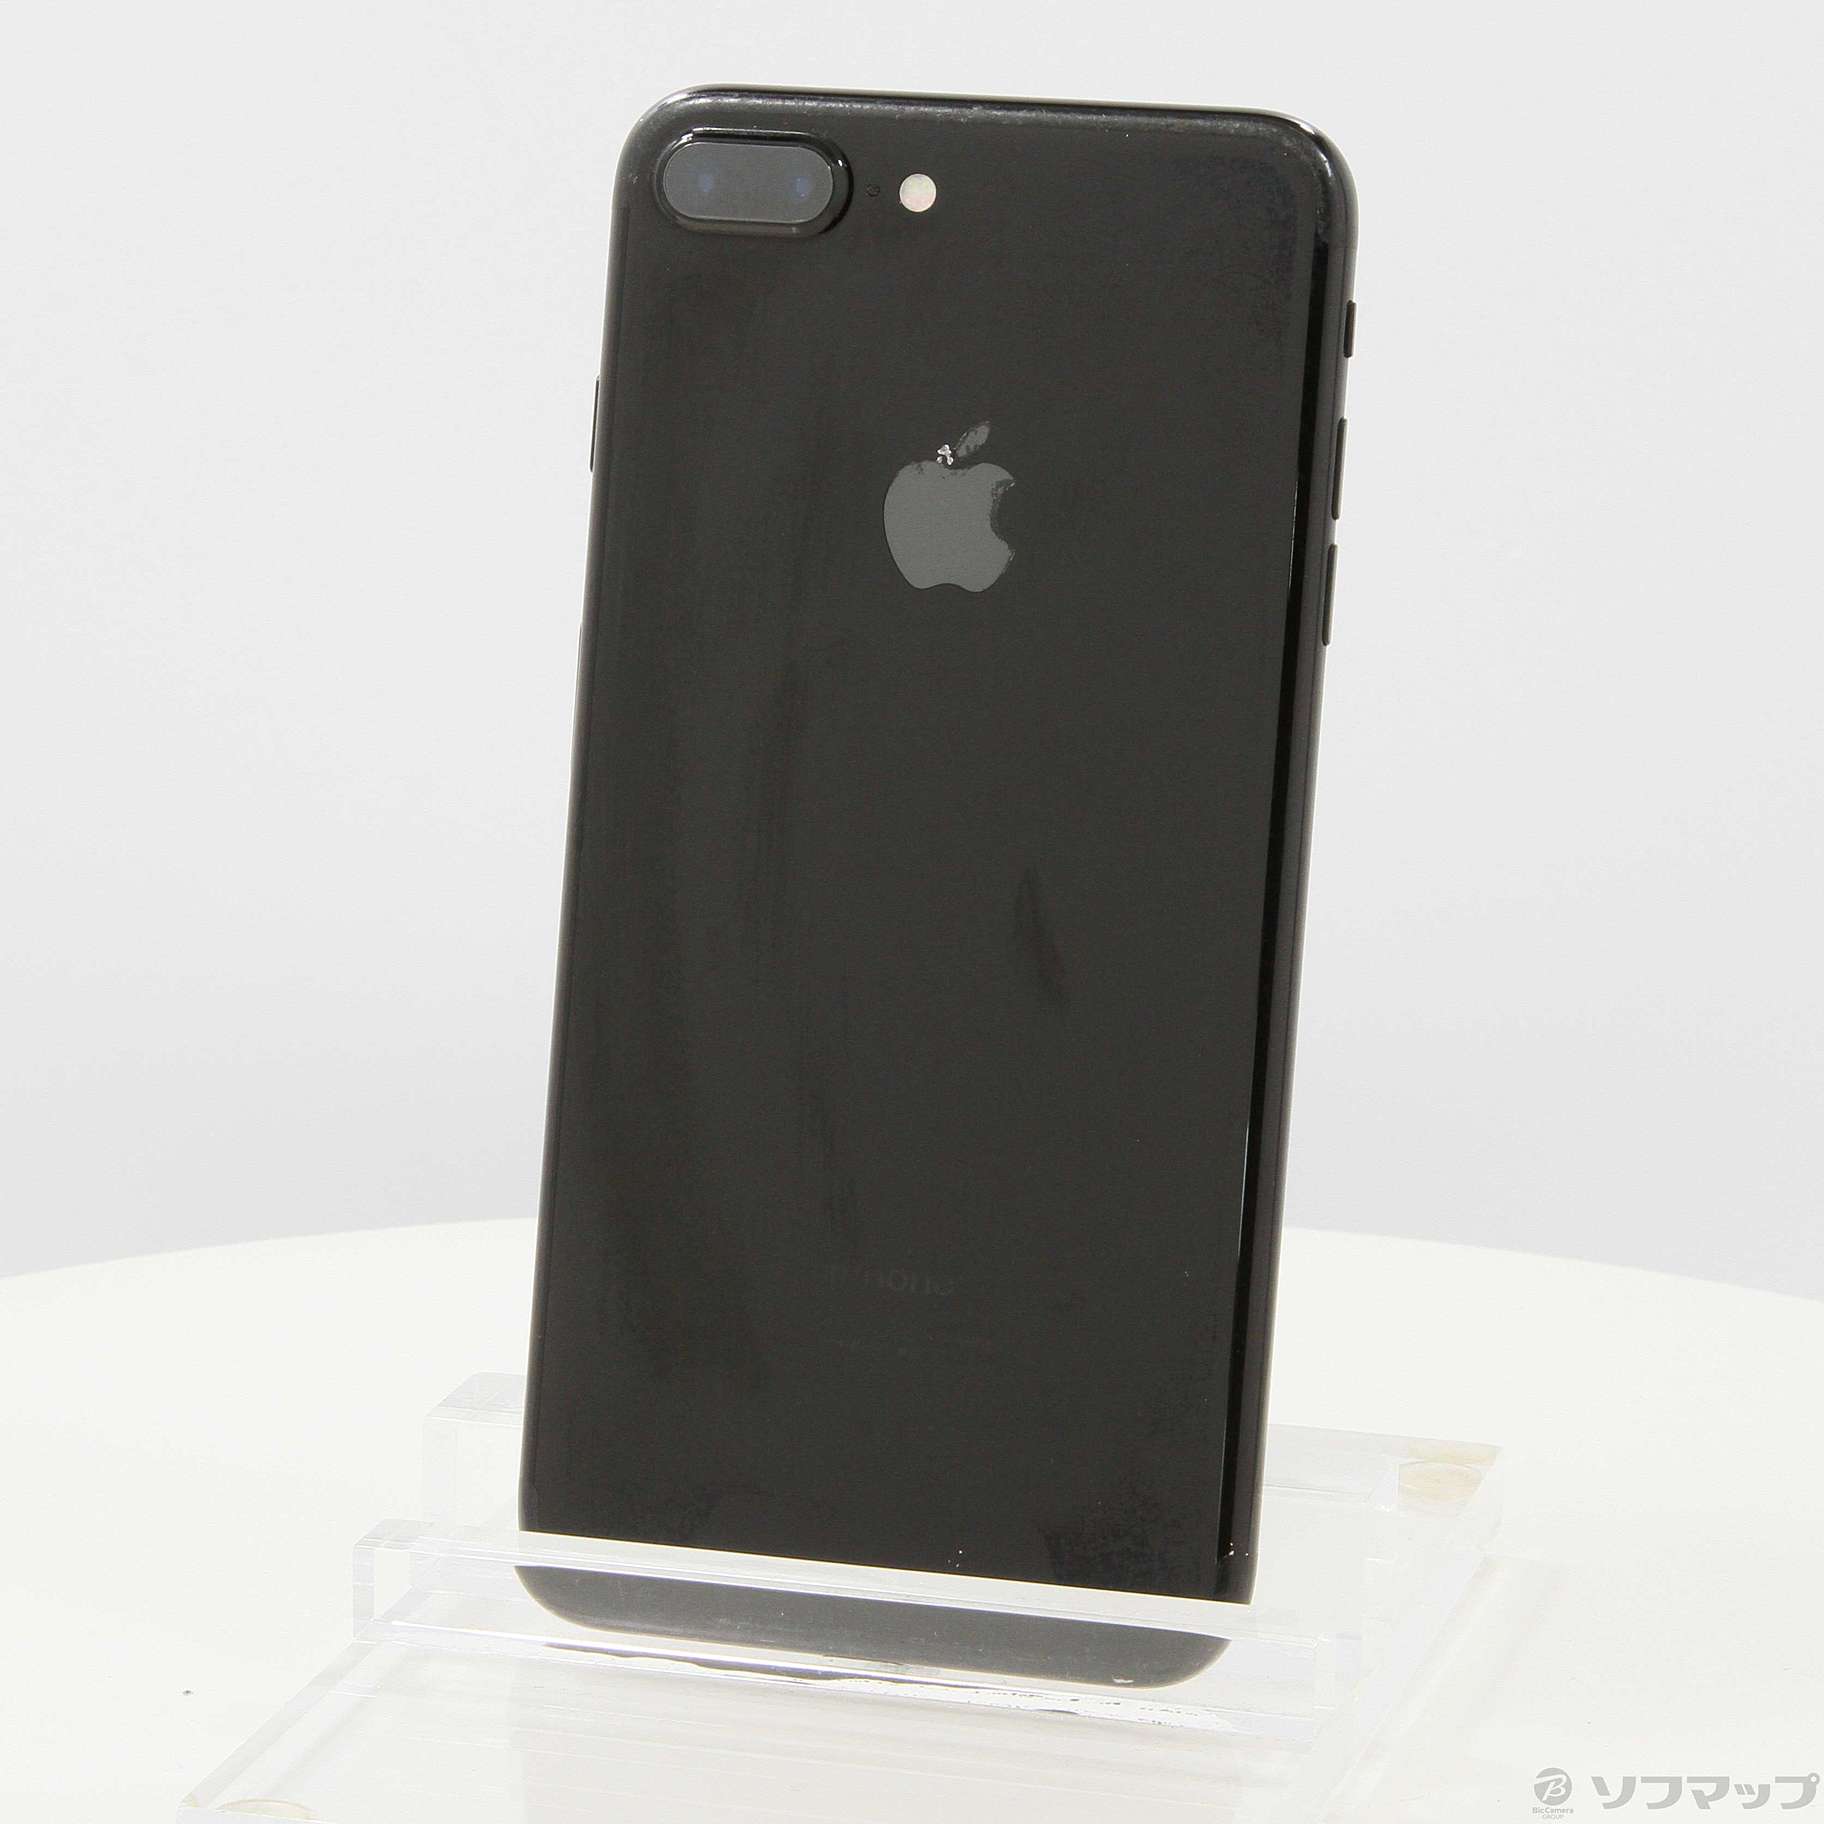 iPhone 7 Plus Jet Black 256 GB SIMフリー